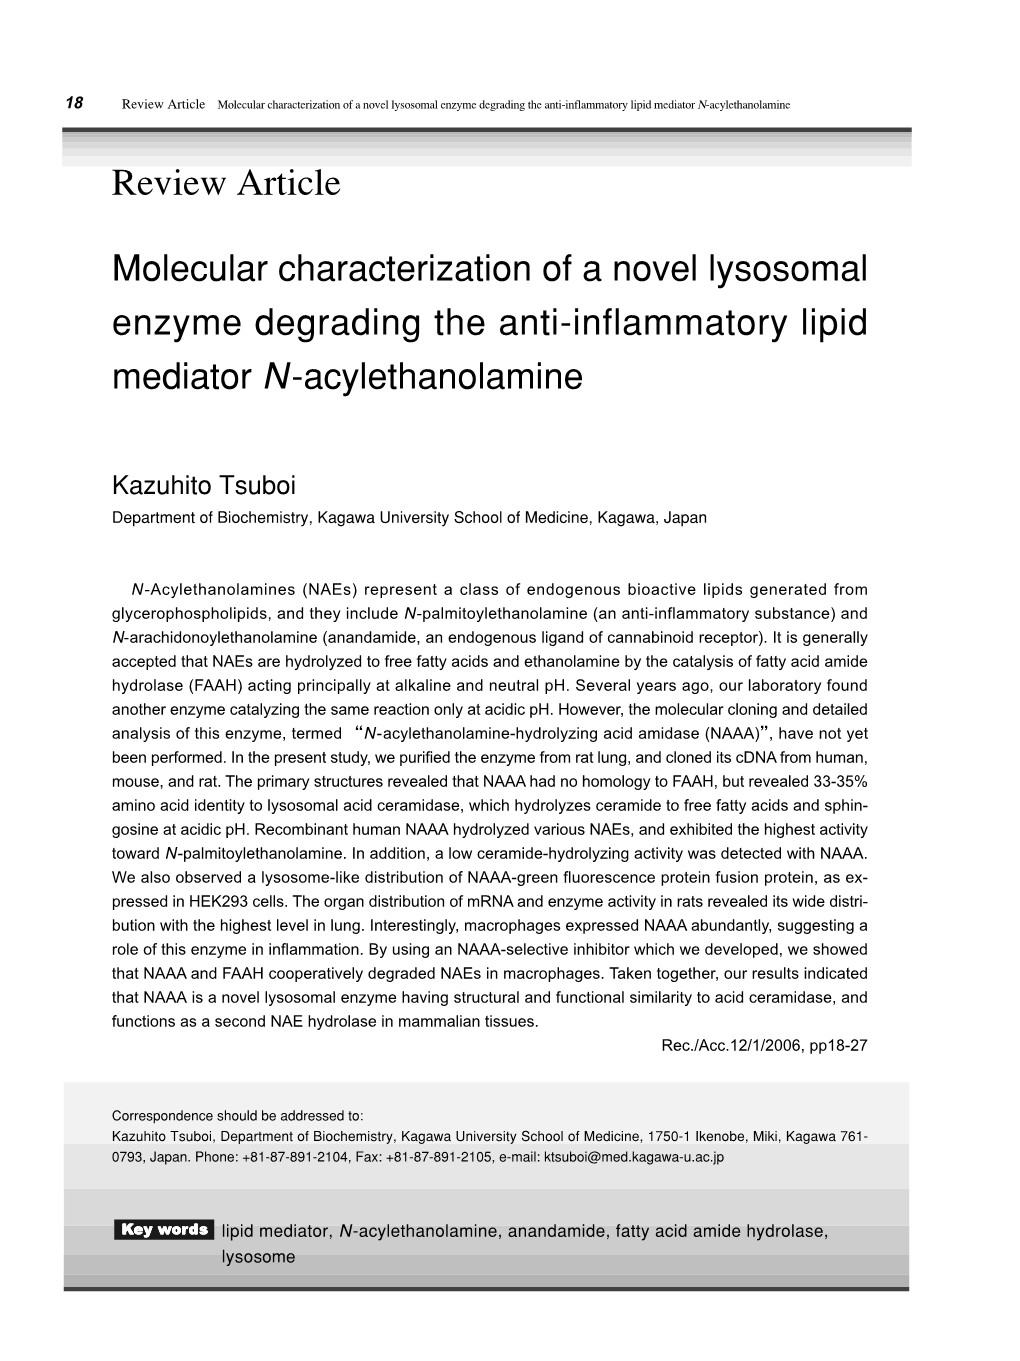 Molecular Characterization of a Novel Lysosomal Enzyme Degrading the Anti-Inflammatory Lipid Mediator N-Acylethanolamine